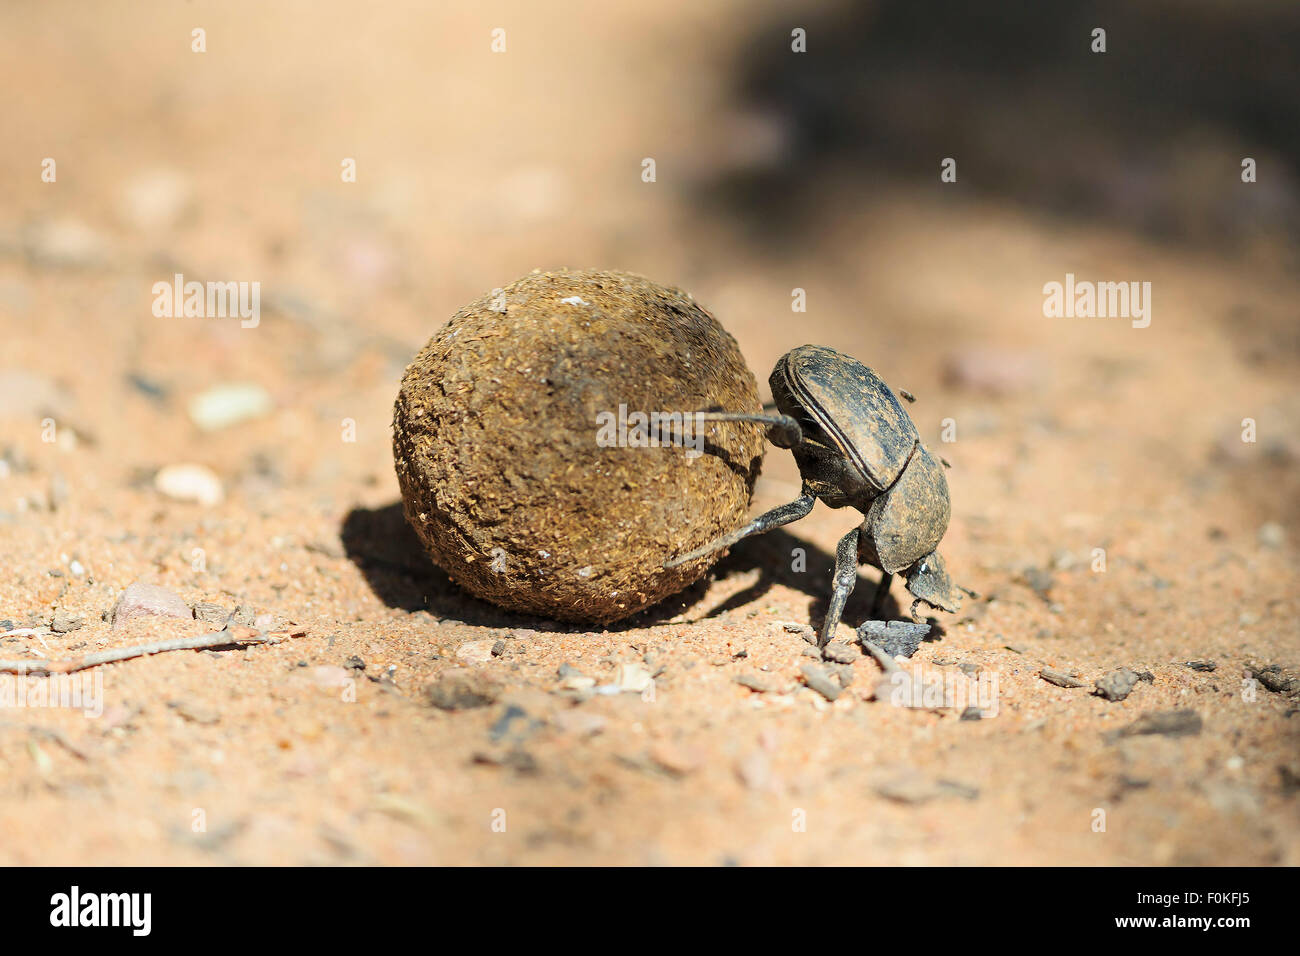 Dung beetle, Scarabaeus sacer, with dung ball Stock Photo